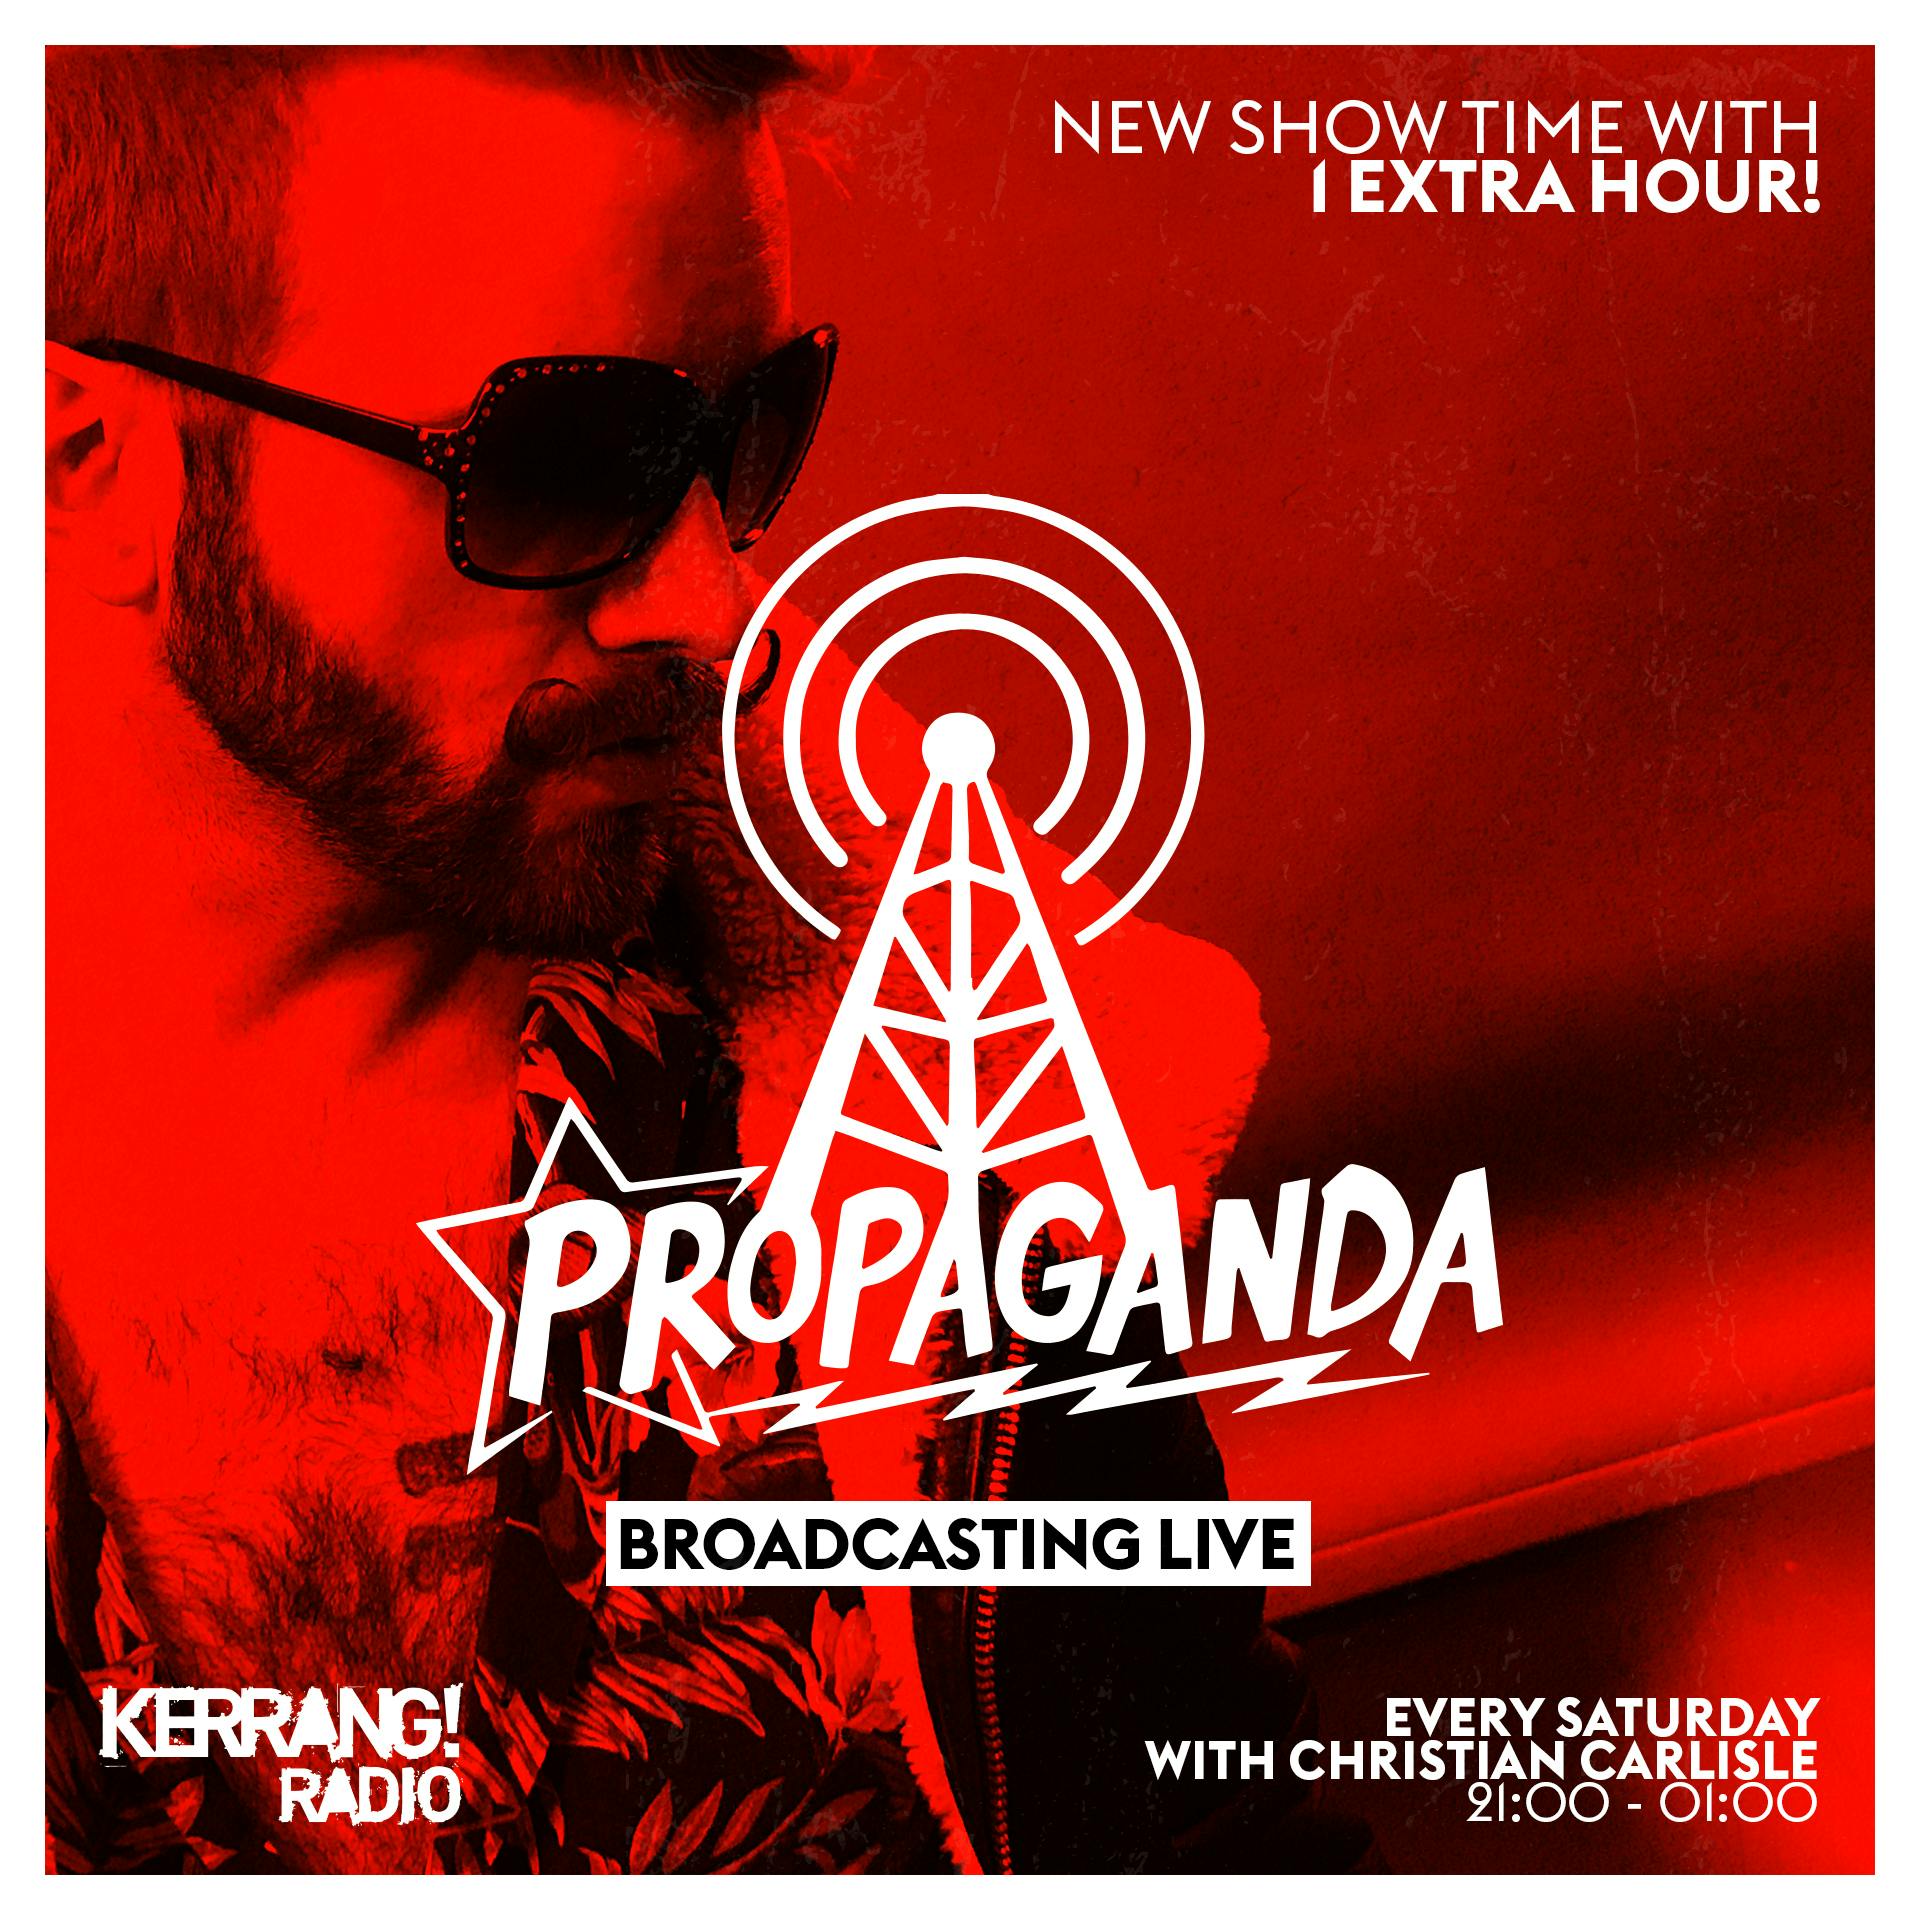 Propaganda’s Kerrang! Radio show with Christian Carlisle